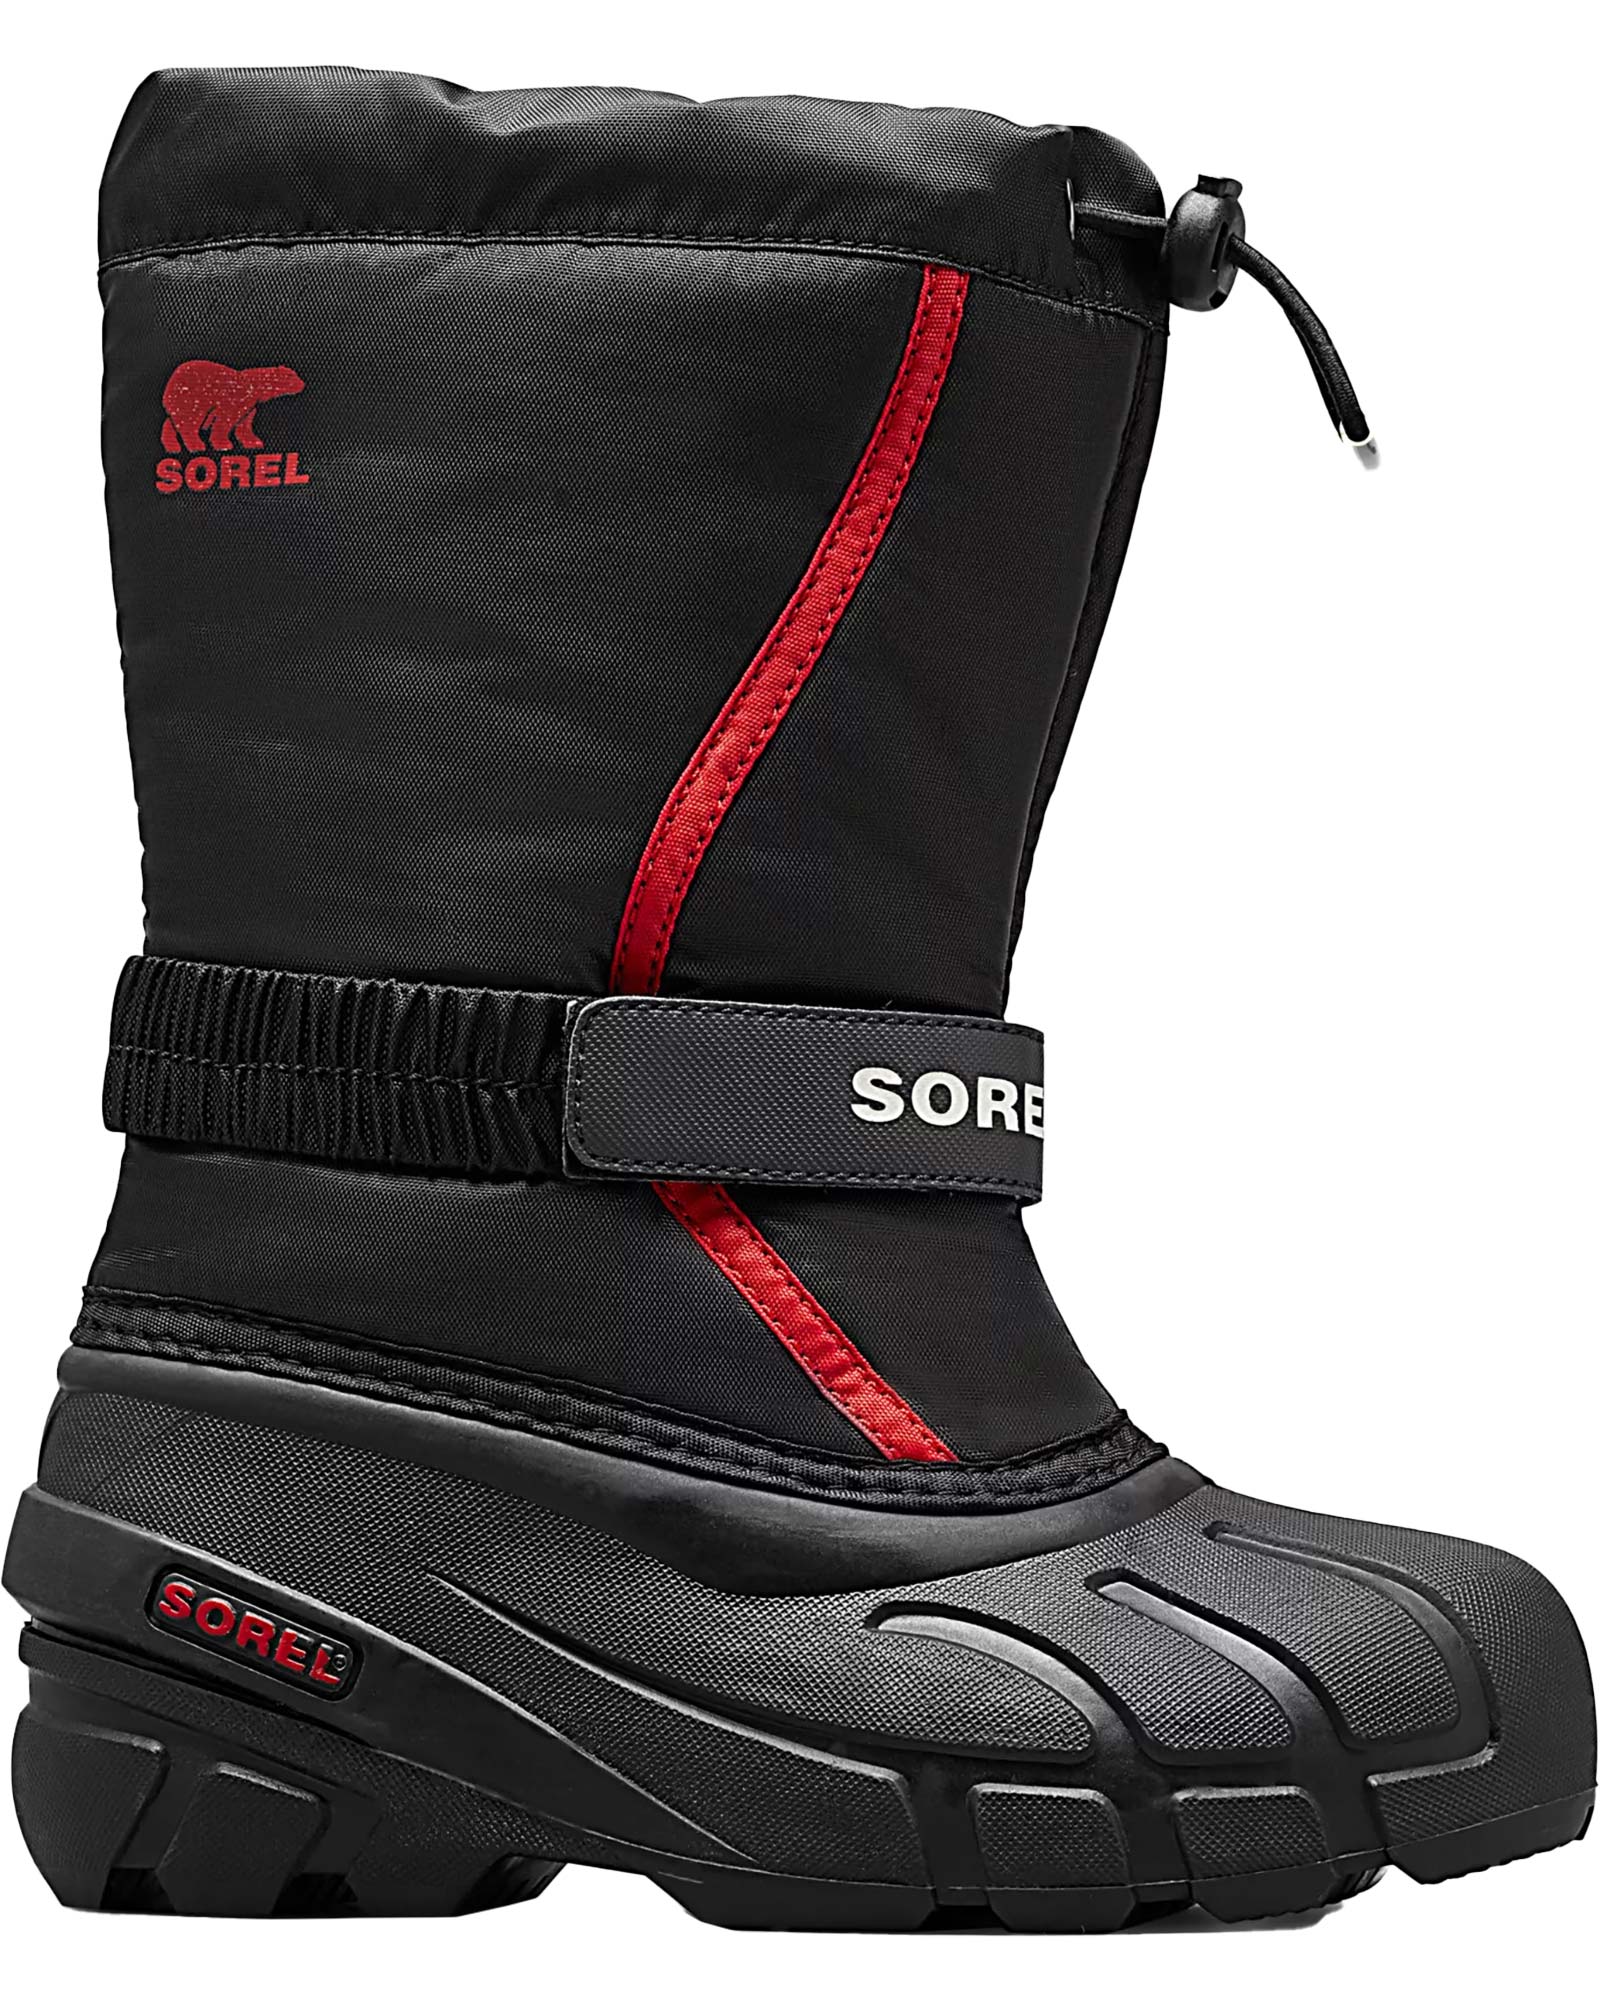 Sorel Flurry Kids’ Snow Boots - Black/Bright Red UK 2